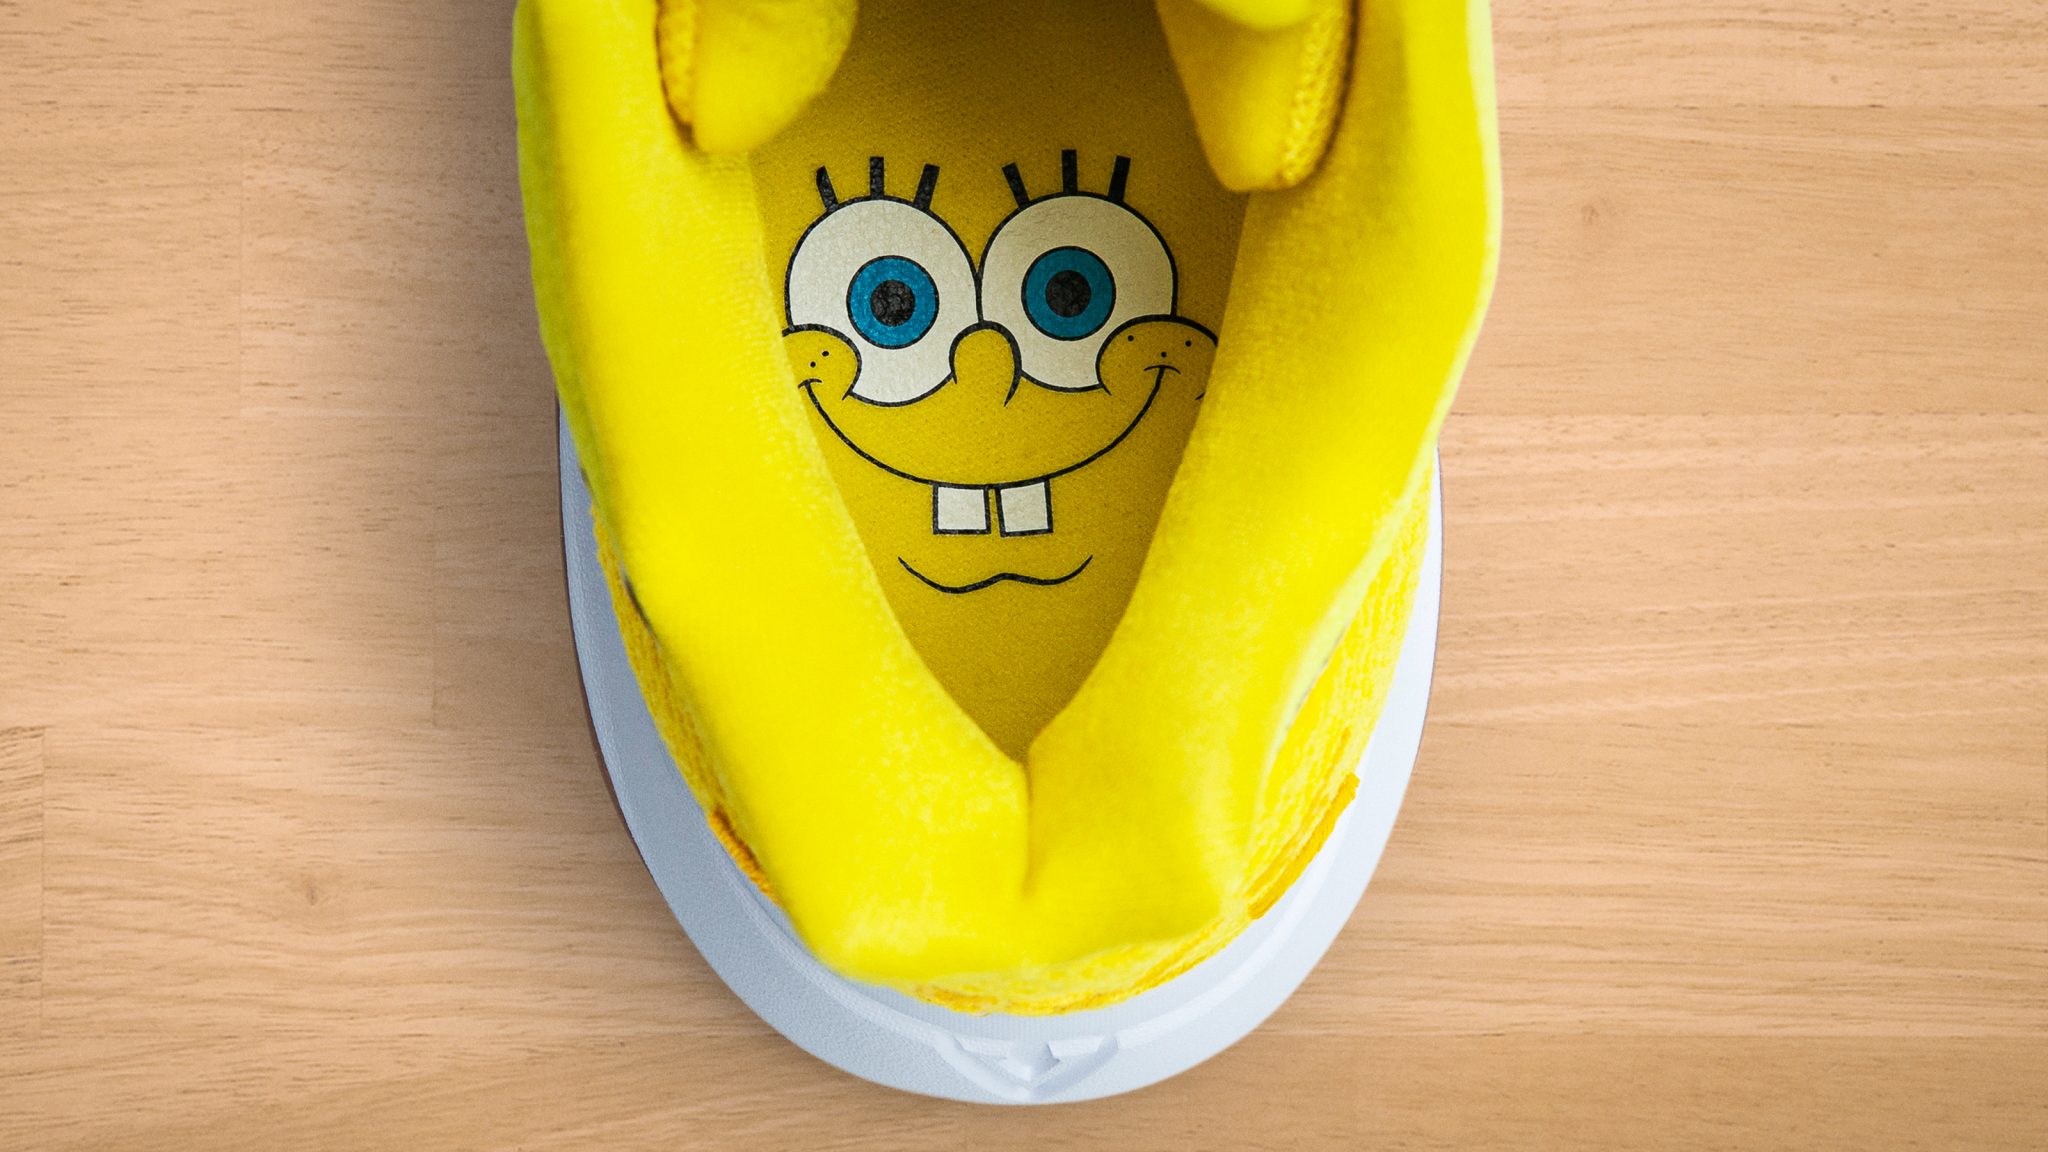 Spongebob Squarepants' x Nike Kyrie Collection